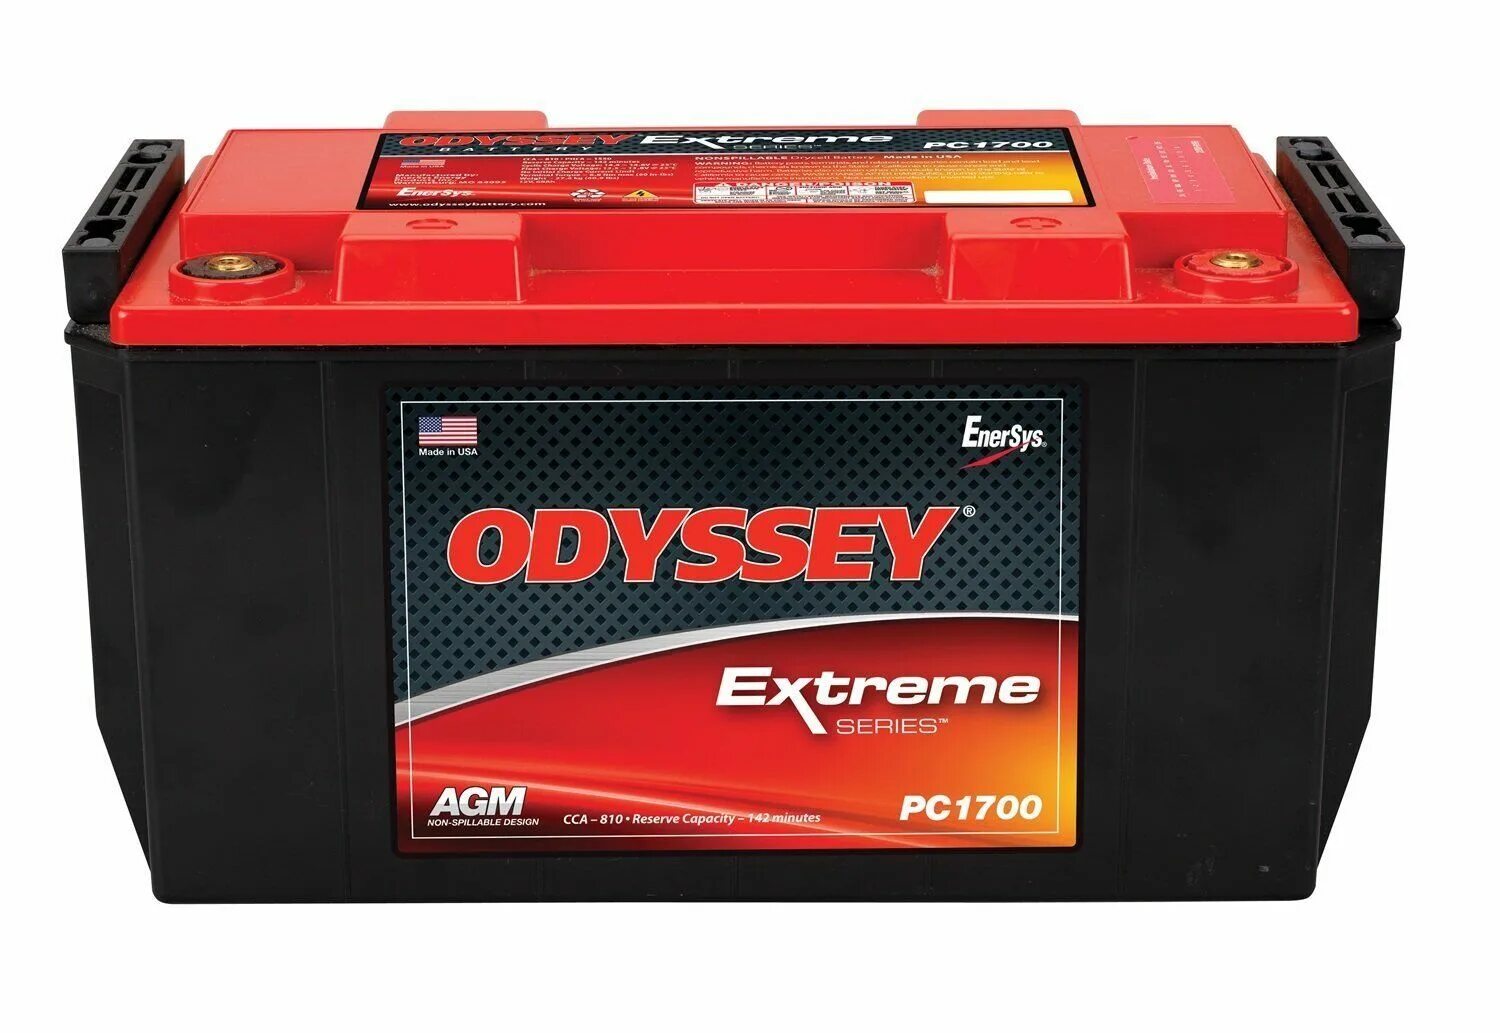 Батарея аккумуляторная pc680 17ah Odyssey ENERSYS. Odyssey pc950 аккумуляторы. Одиссей 110 AGM. Odyssey extreme PC 1200.